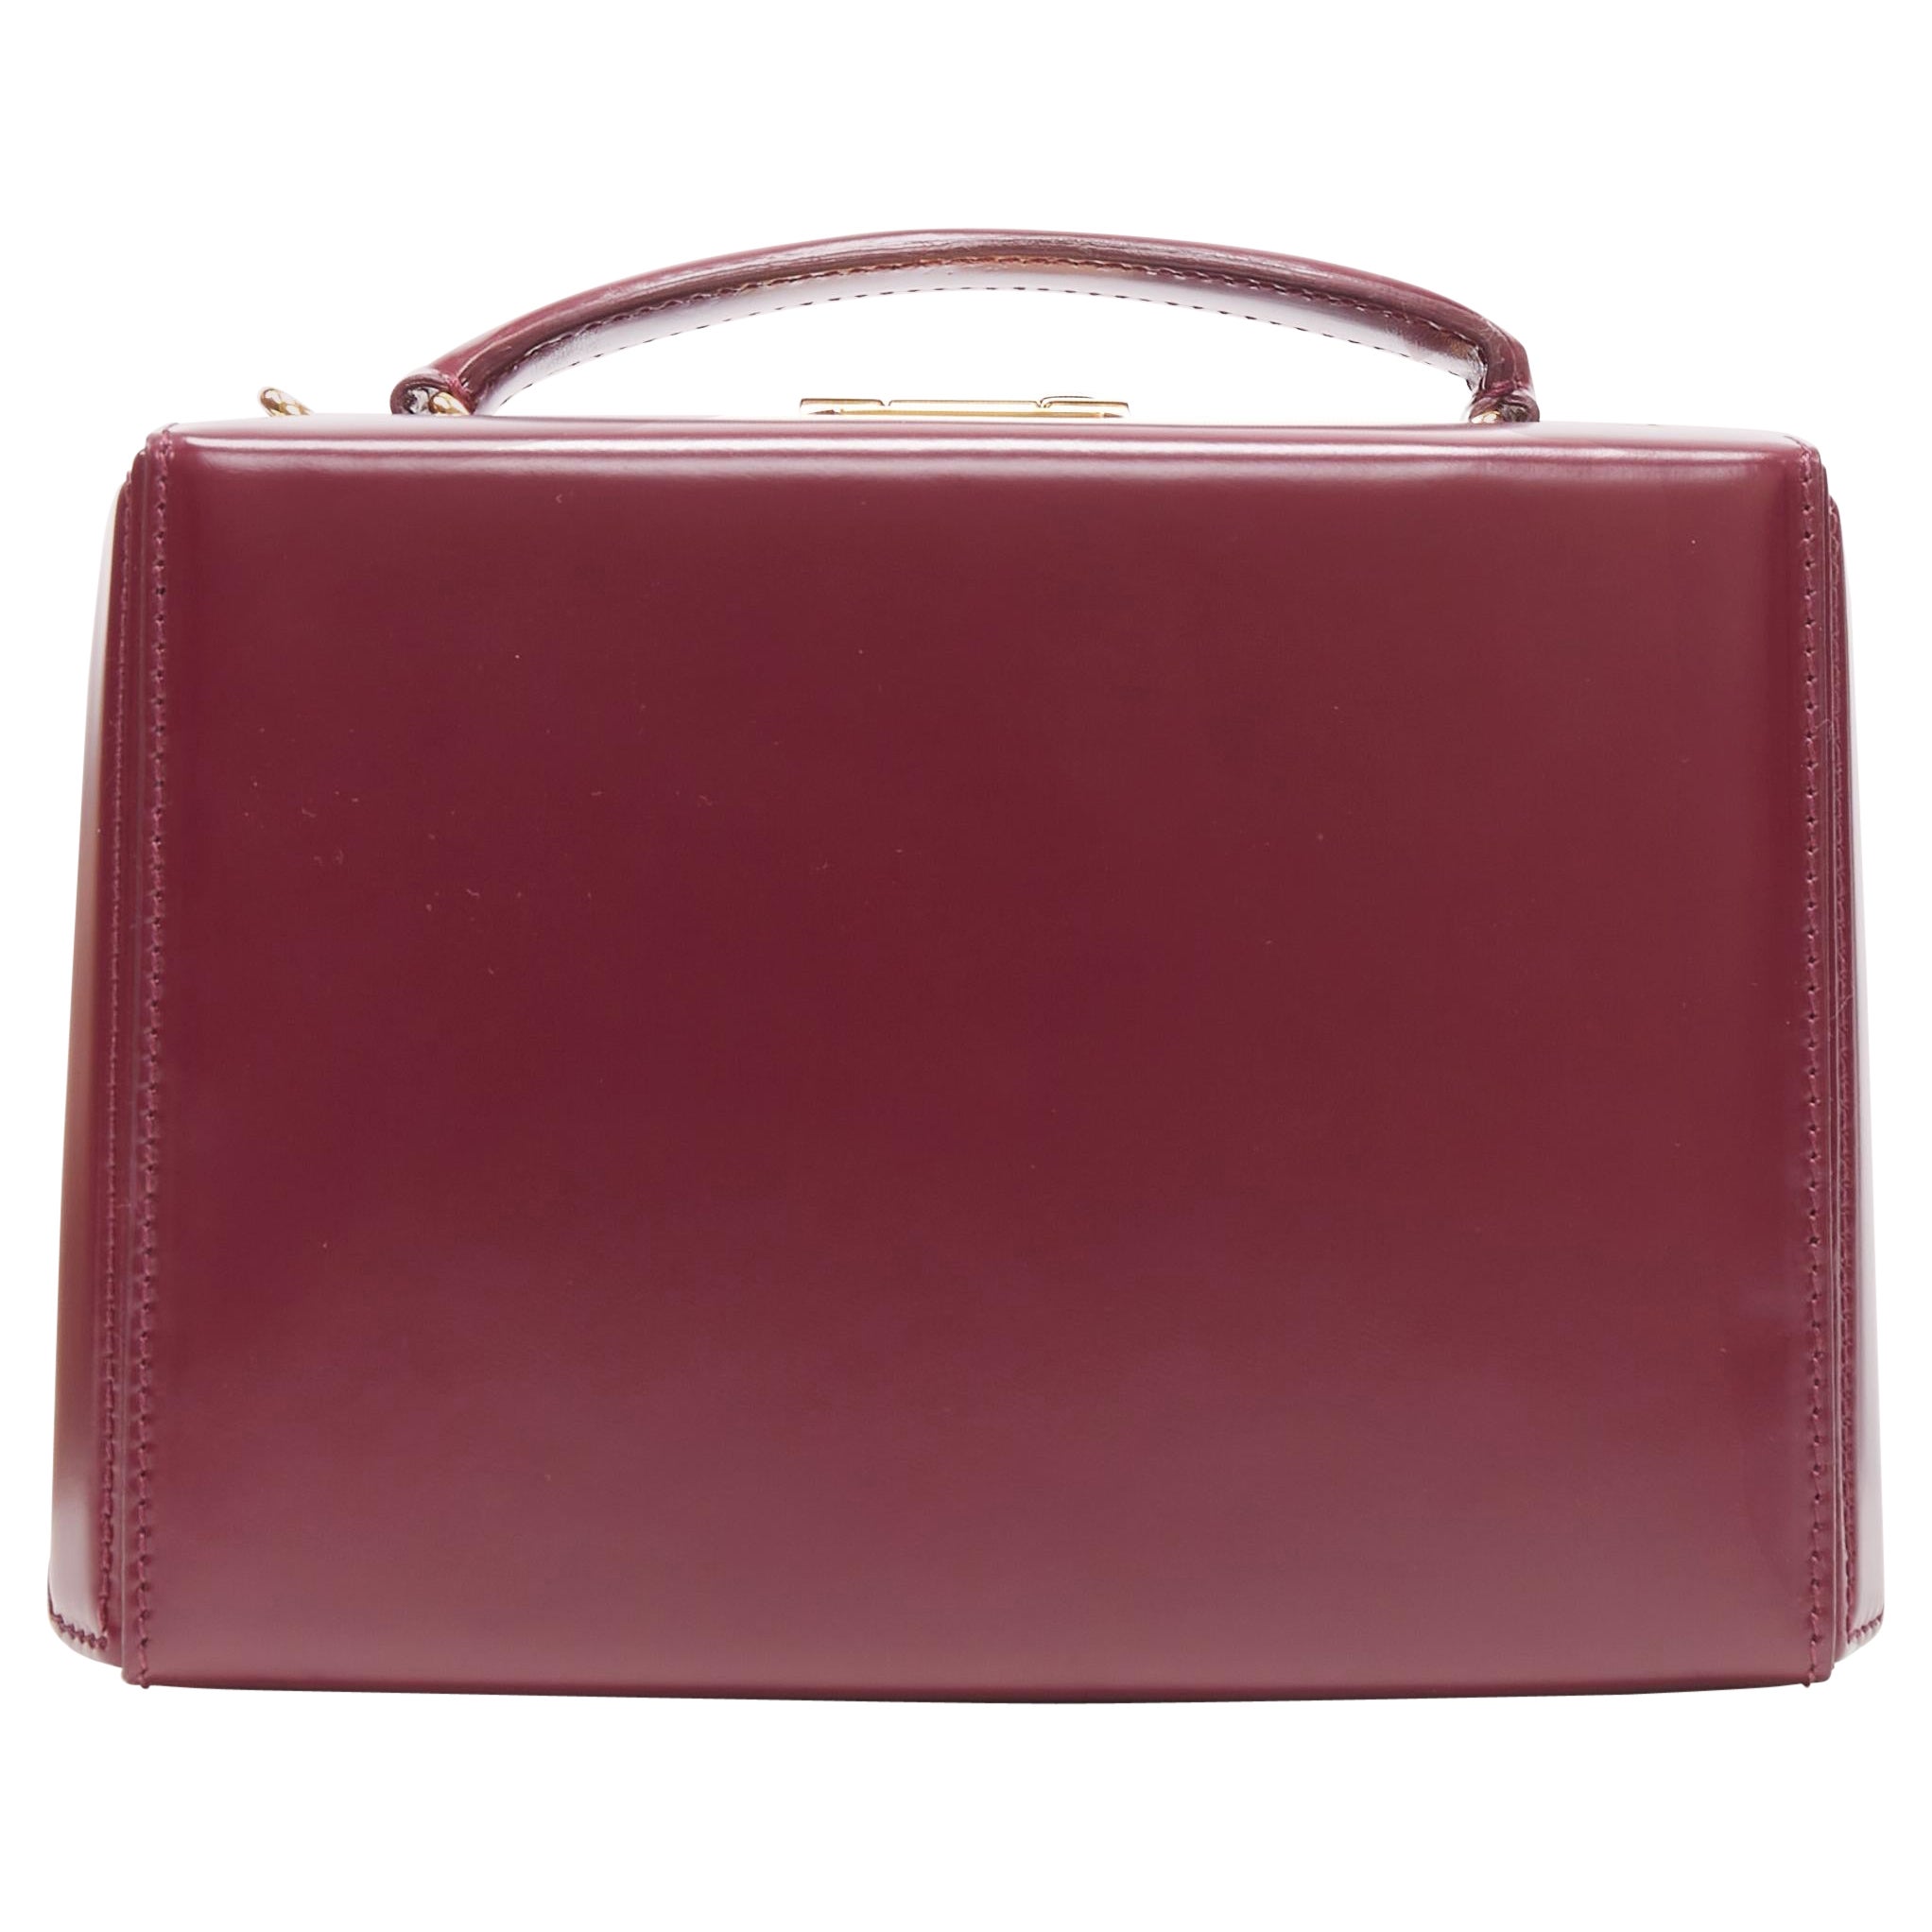 MARK CROSS Grace Small purple smooth leather gold hardware box crossbody bag